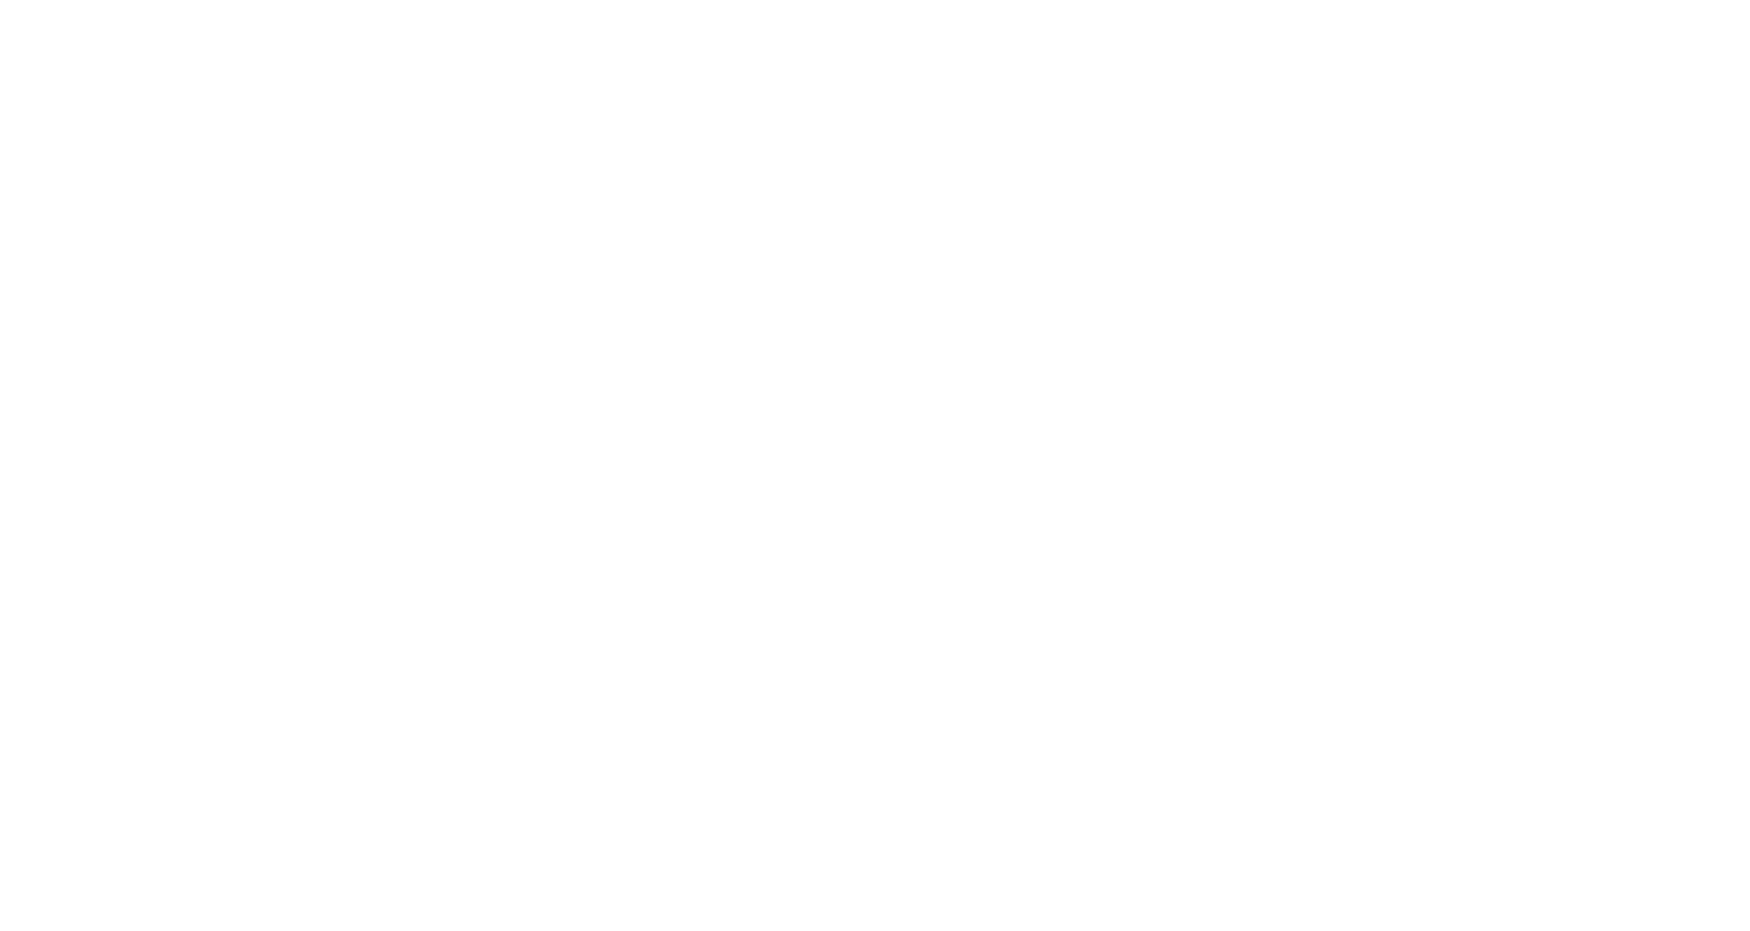 Consol_ParkingGarage